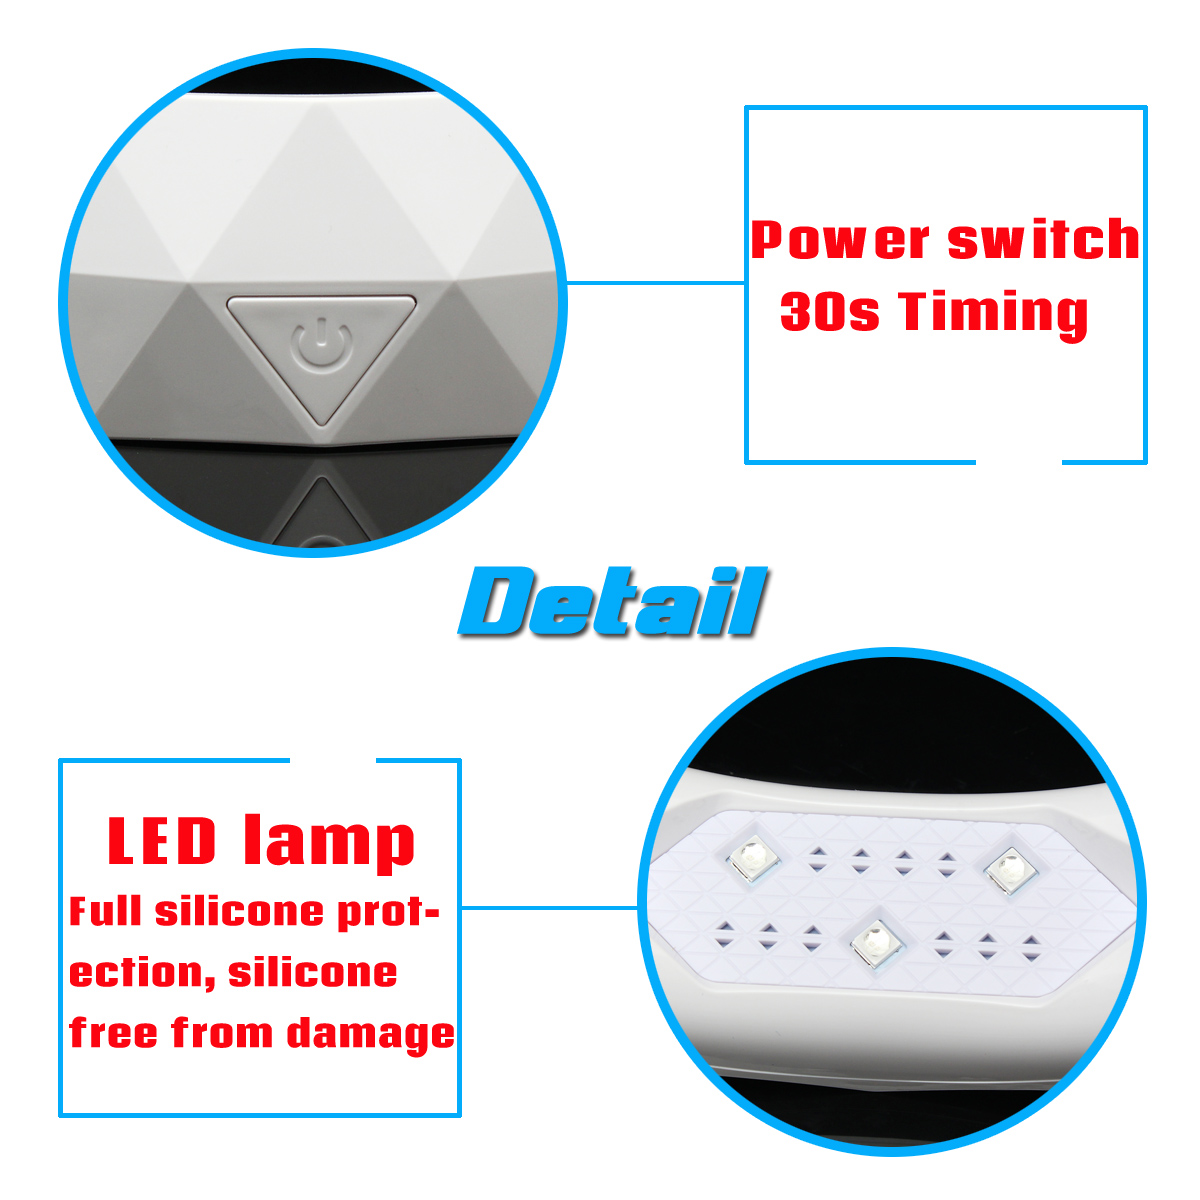 9W-Mini-UV-LED-Nail-Dryer-Gel-Polish-Lamp-Light-Curing-Phototherapy-Machine-1259640